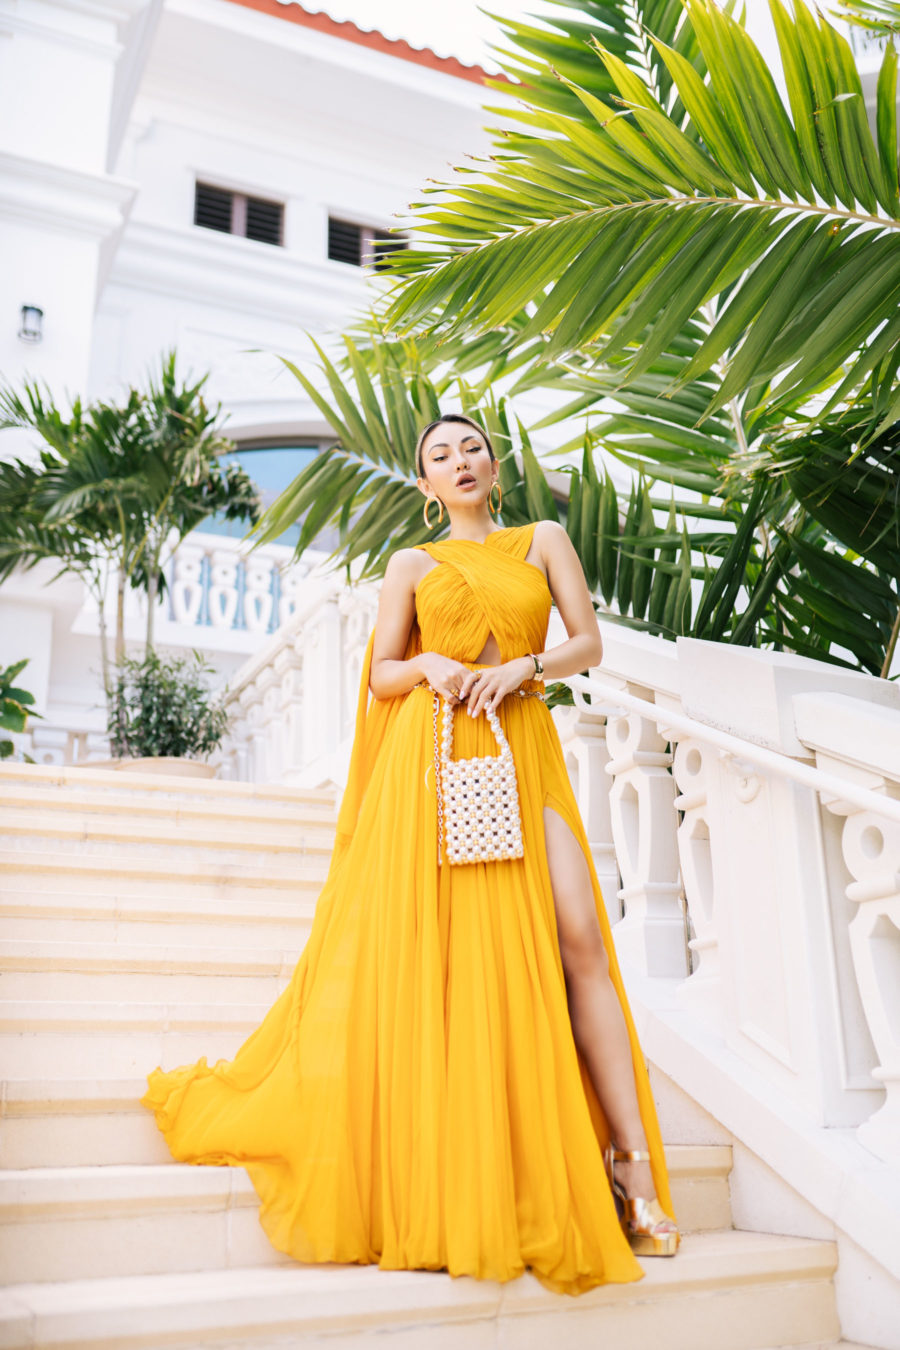 jessica wang wearing a yellow oscar de la renta cut out dress while sharing trendy summer dresses // Jessica Wang - Notjessfashion.com